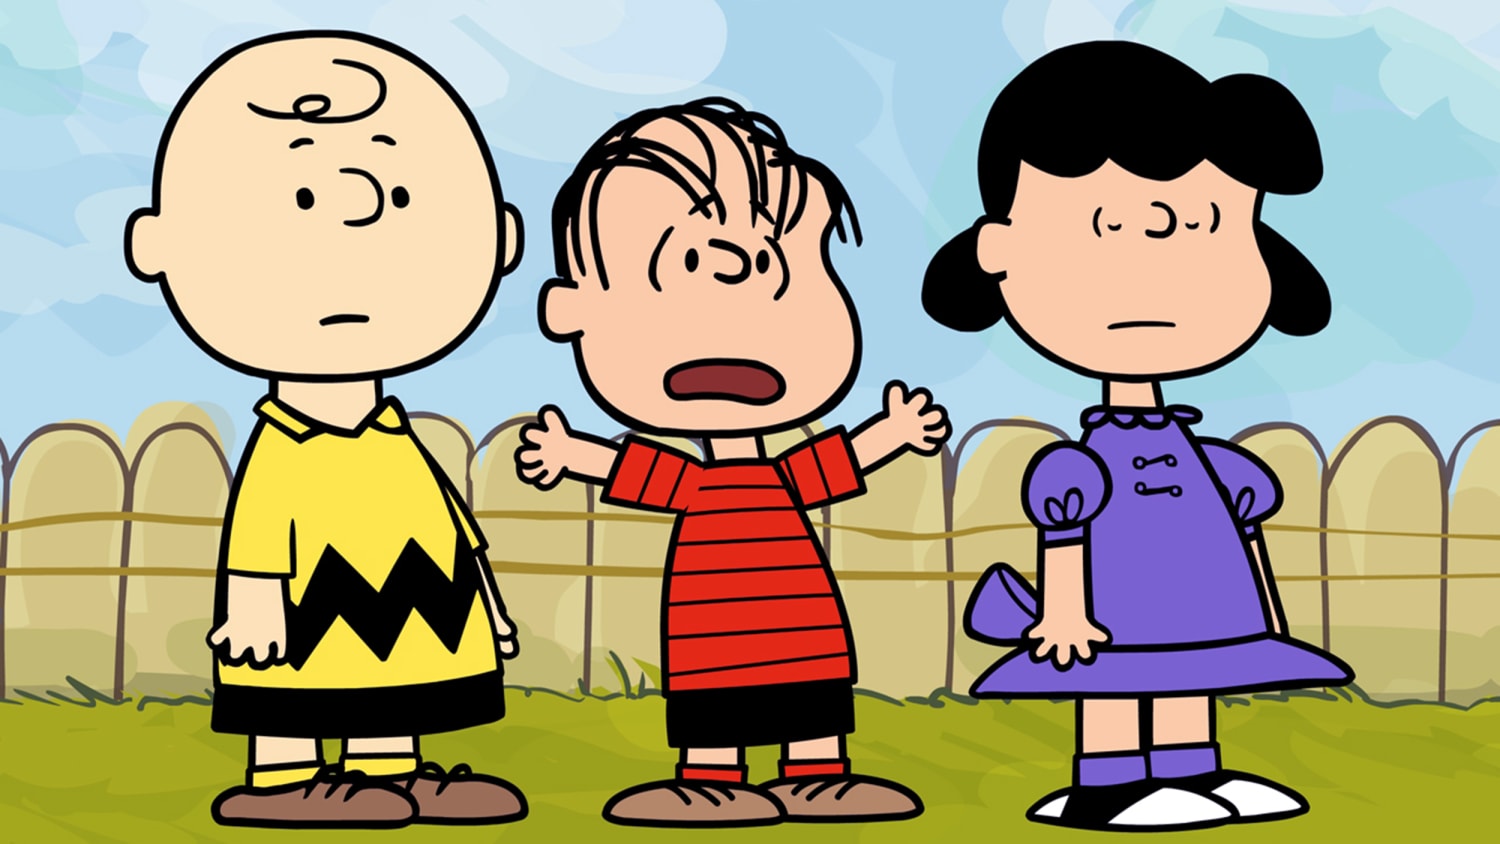 Linus Maurer Inspiration Behind Peanuts Character Dies At 90